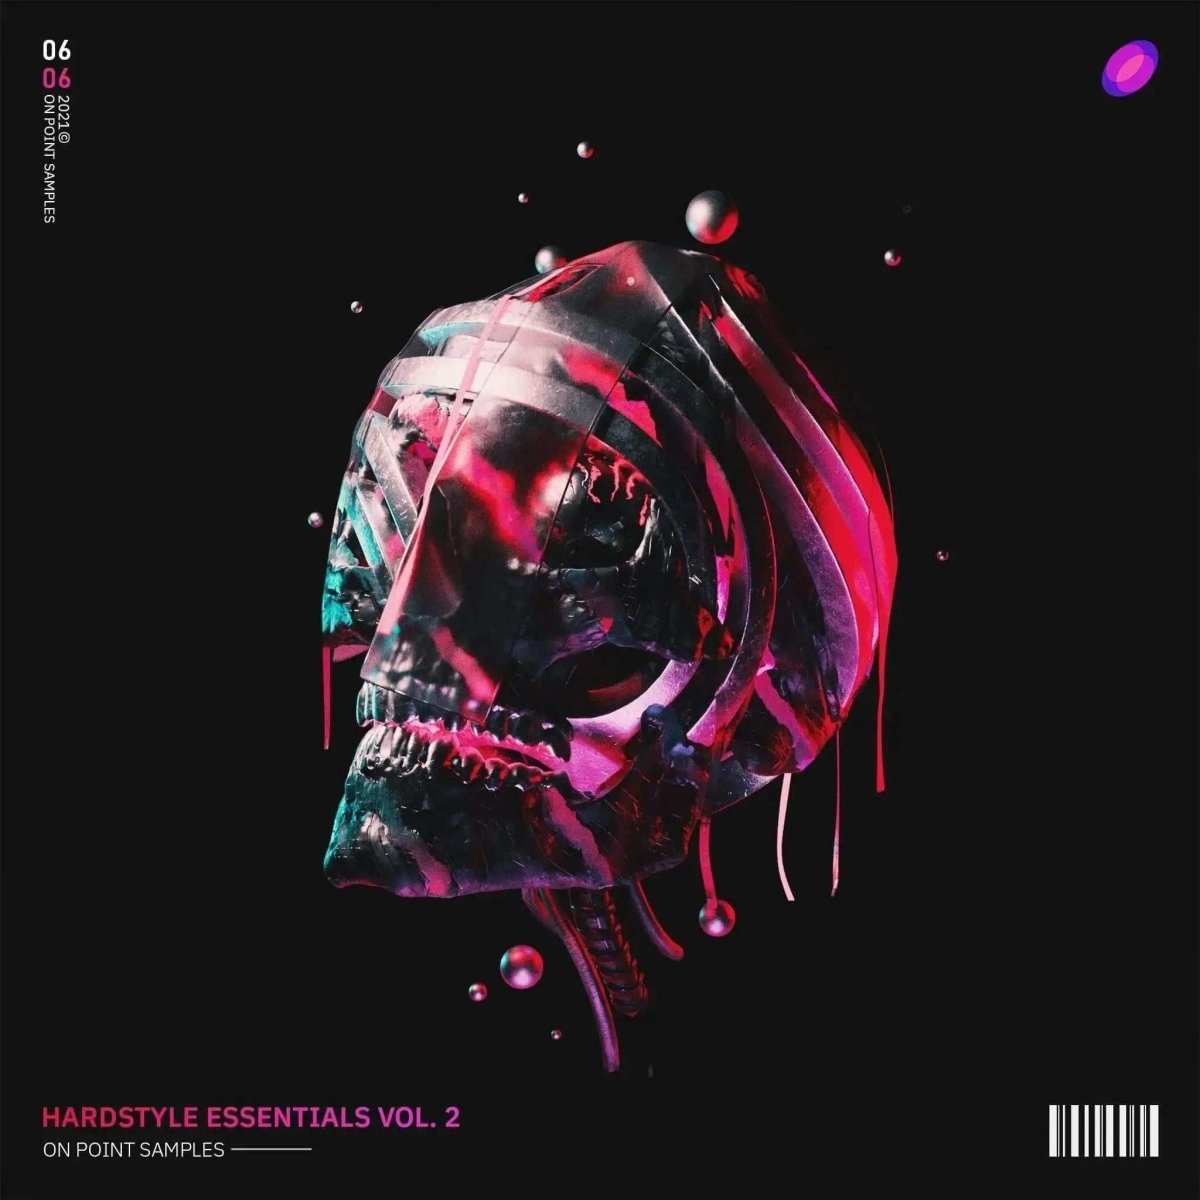 Hardstyle Essentials Vol. 2 - Hardstyle - On Point Samples